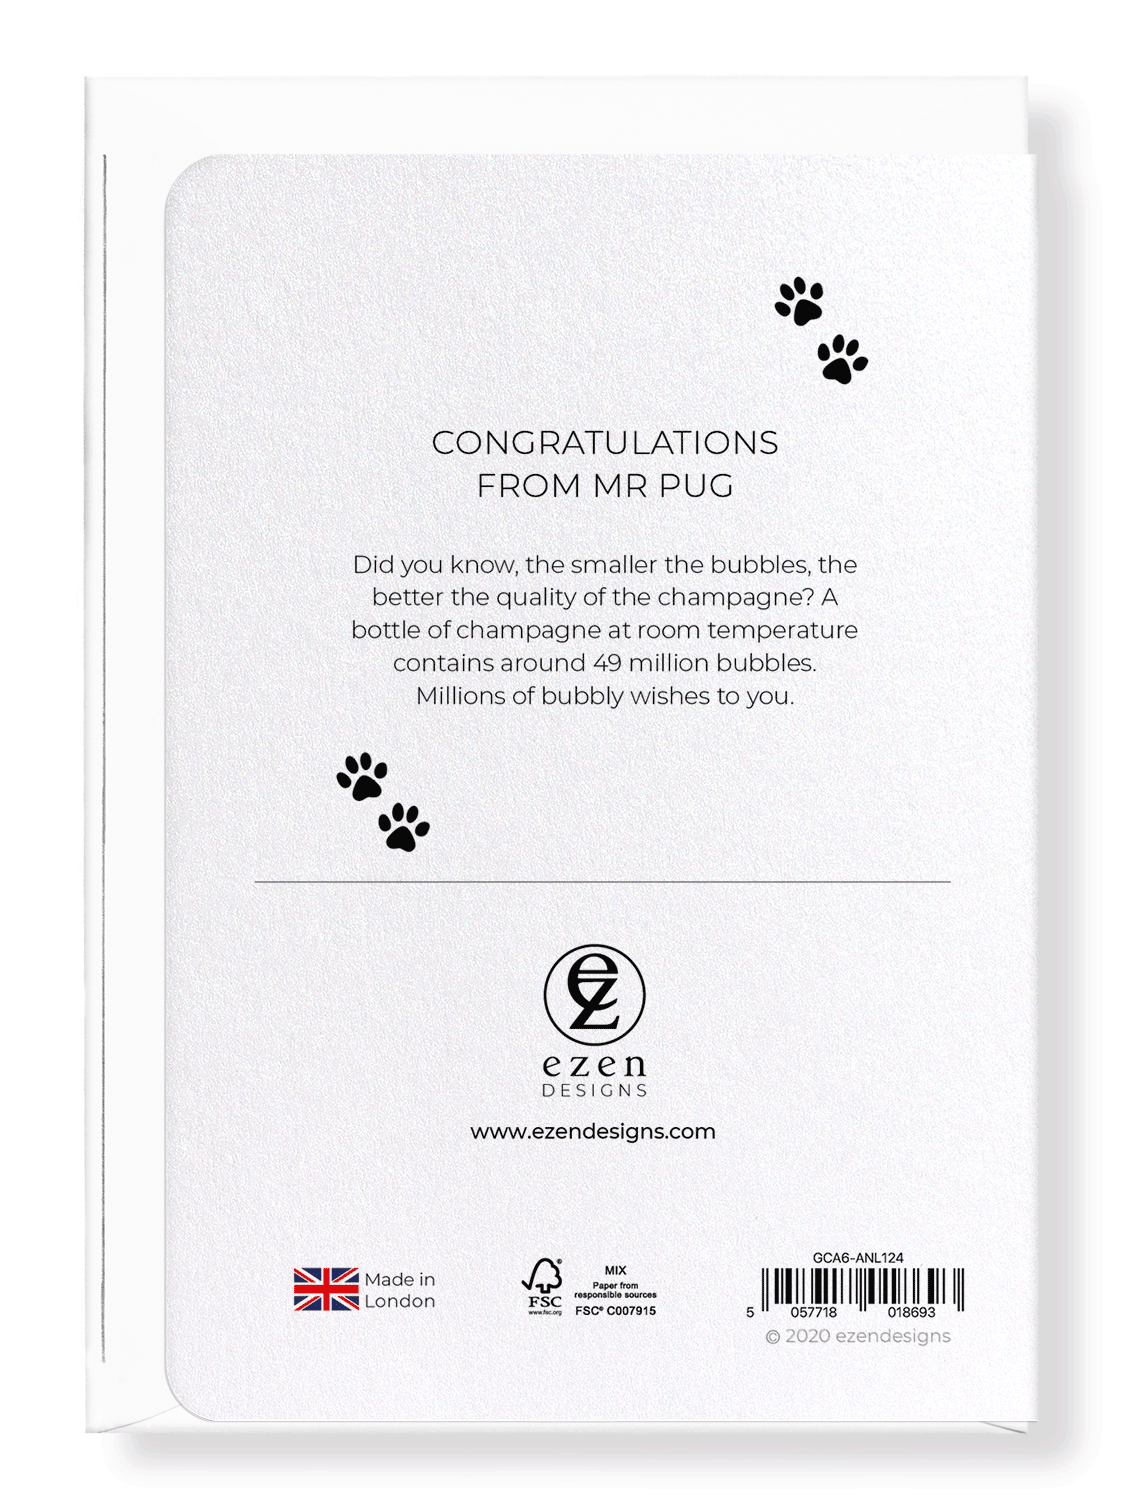 Ezen Designs - Congratulations from mr pug - Greeting Card - Back